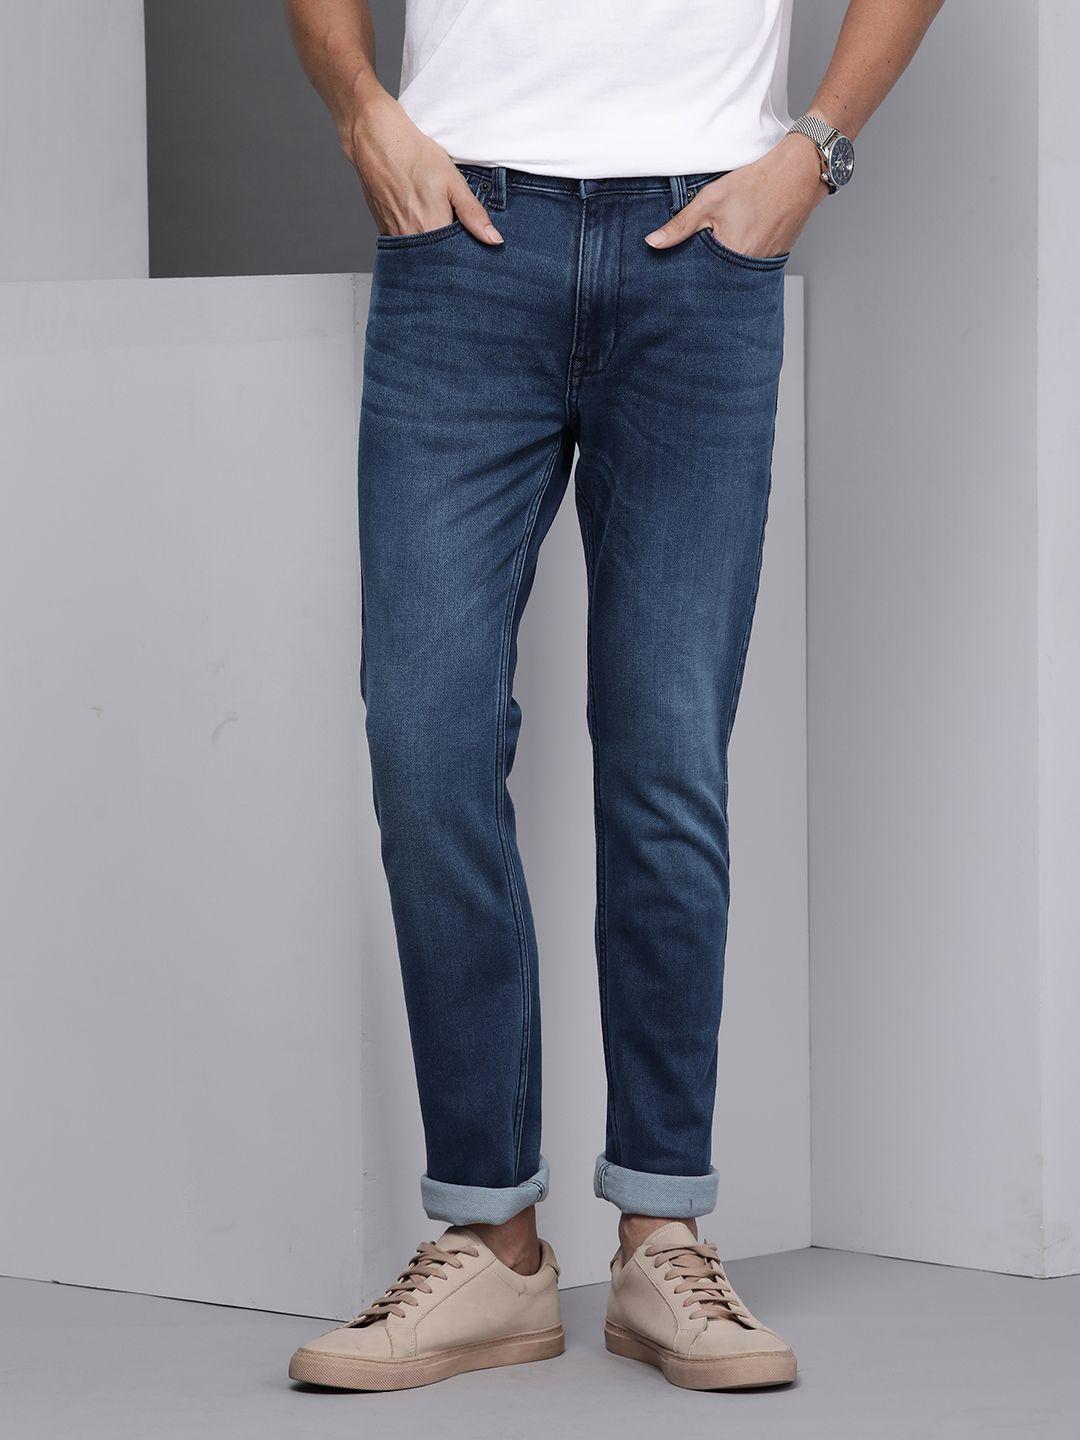 kenneth-cole-rapido-men-mid-blue-light-fade-slim-fit-mid-rise-quintessential-jeans